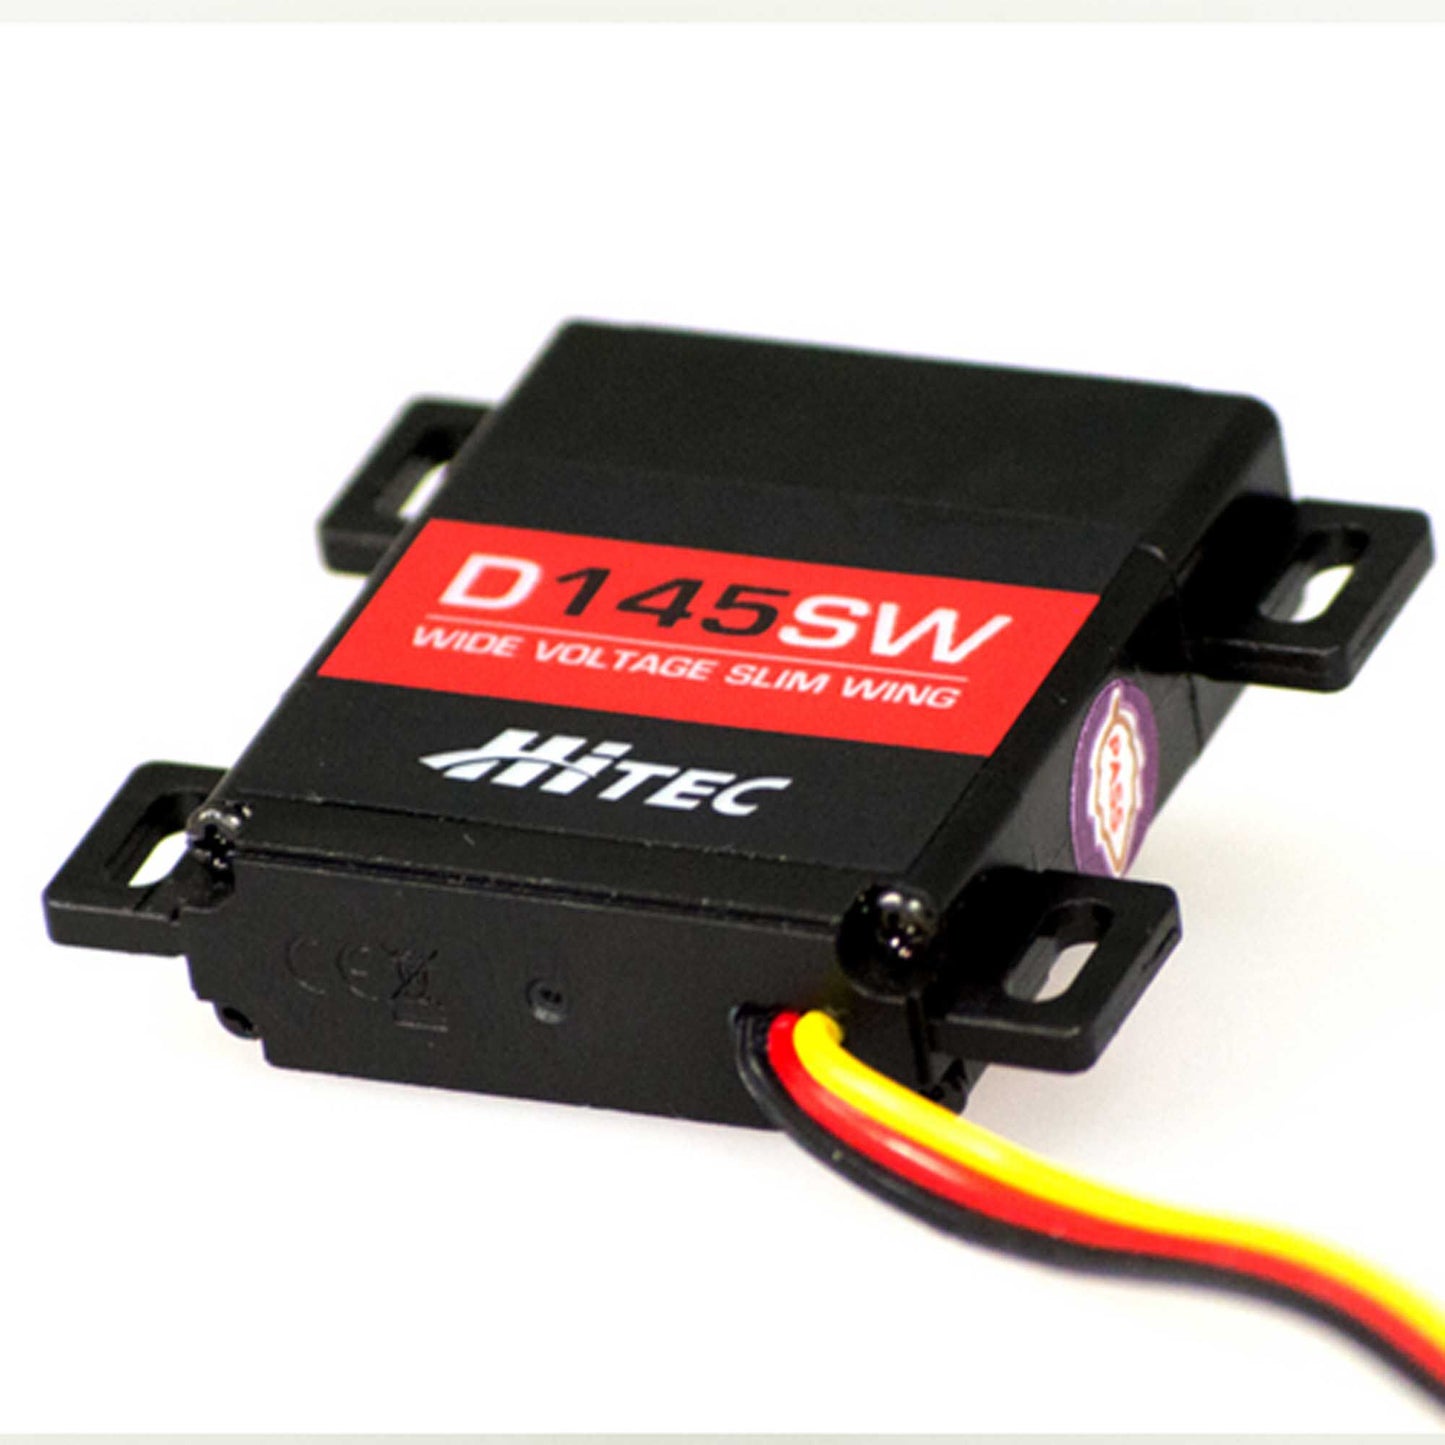 D145SW Thin Digital Voltage Steel Gear Slim Wing Servo